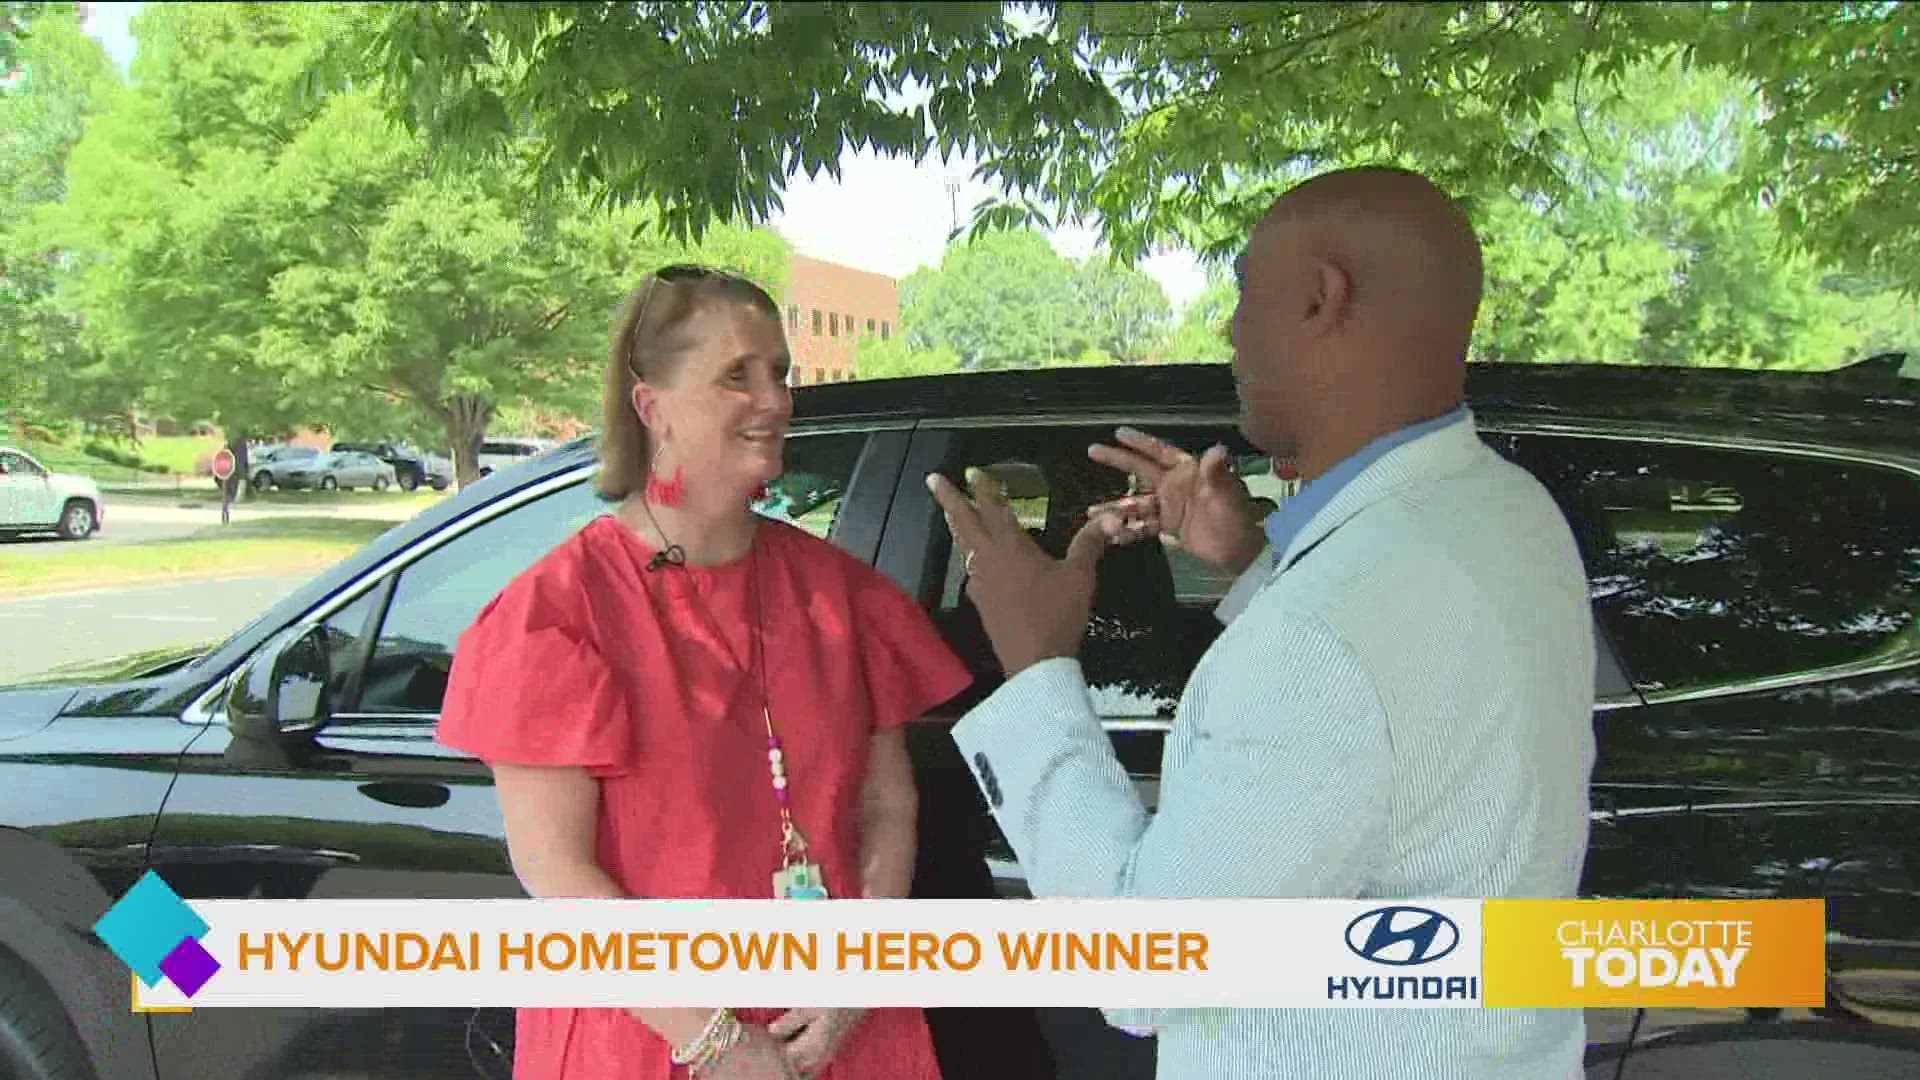 Hyundai Hometown Heroes winner honored